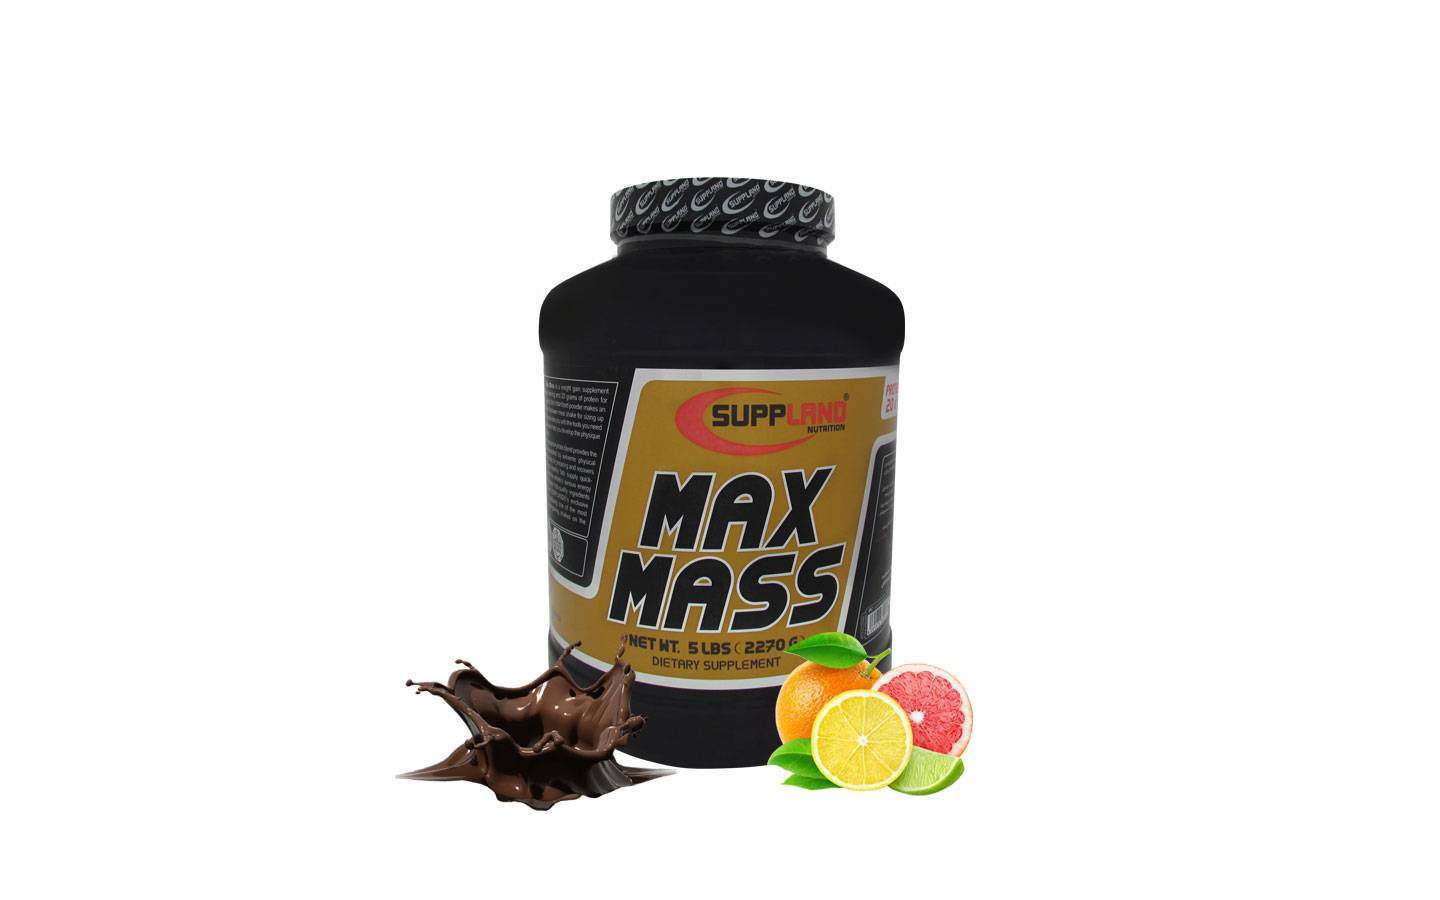 پودر مکس مس ساپلند نوتریشن با طعم شکلات 2270 گرمی Suppland Nutrition Max Mass Powder 2270 gr